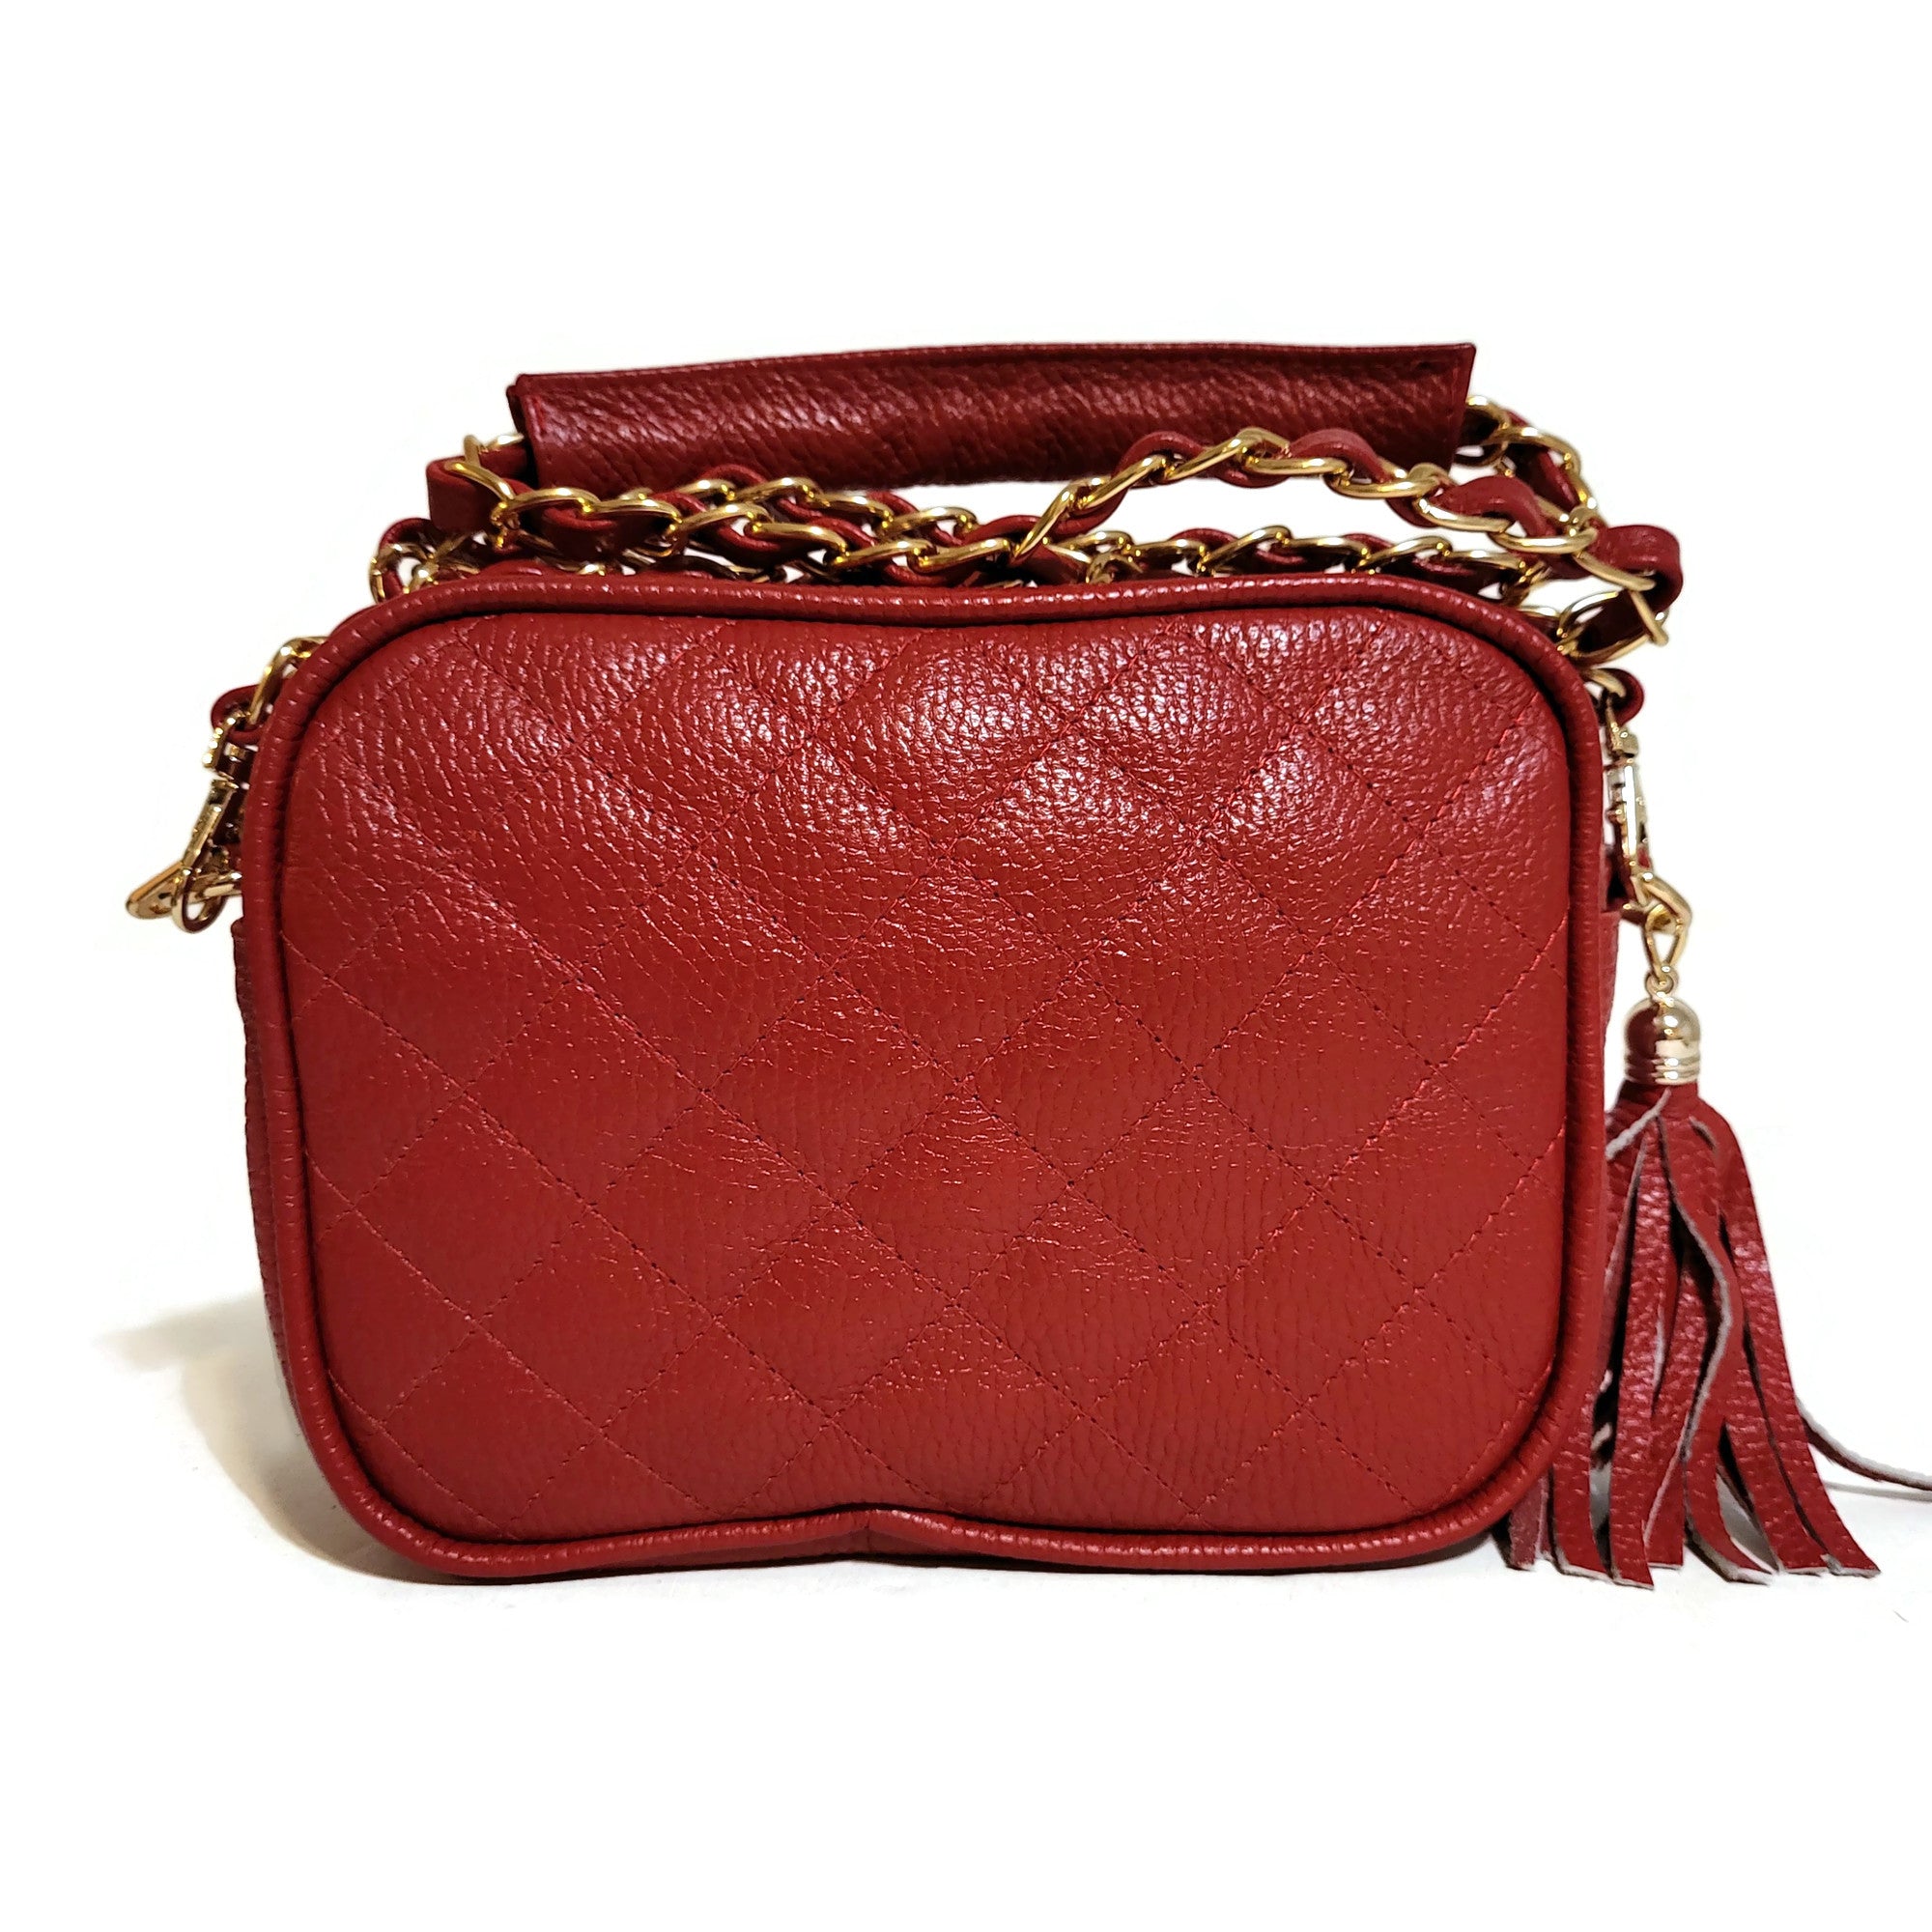 Red leather Bag for Women, Handmade leather bag, small bag for women, shoulder bag